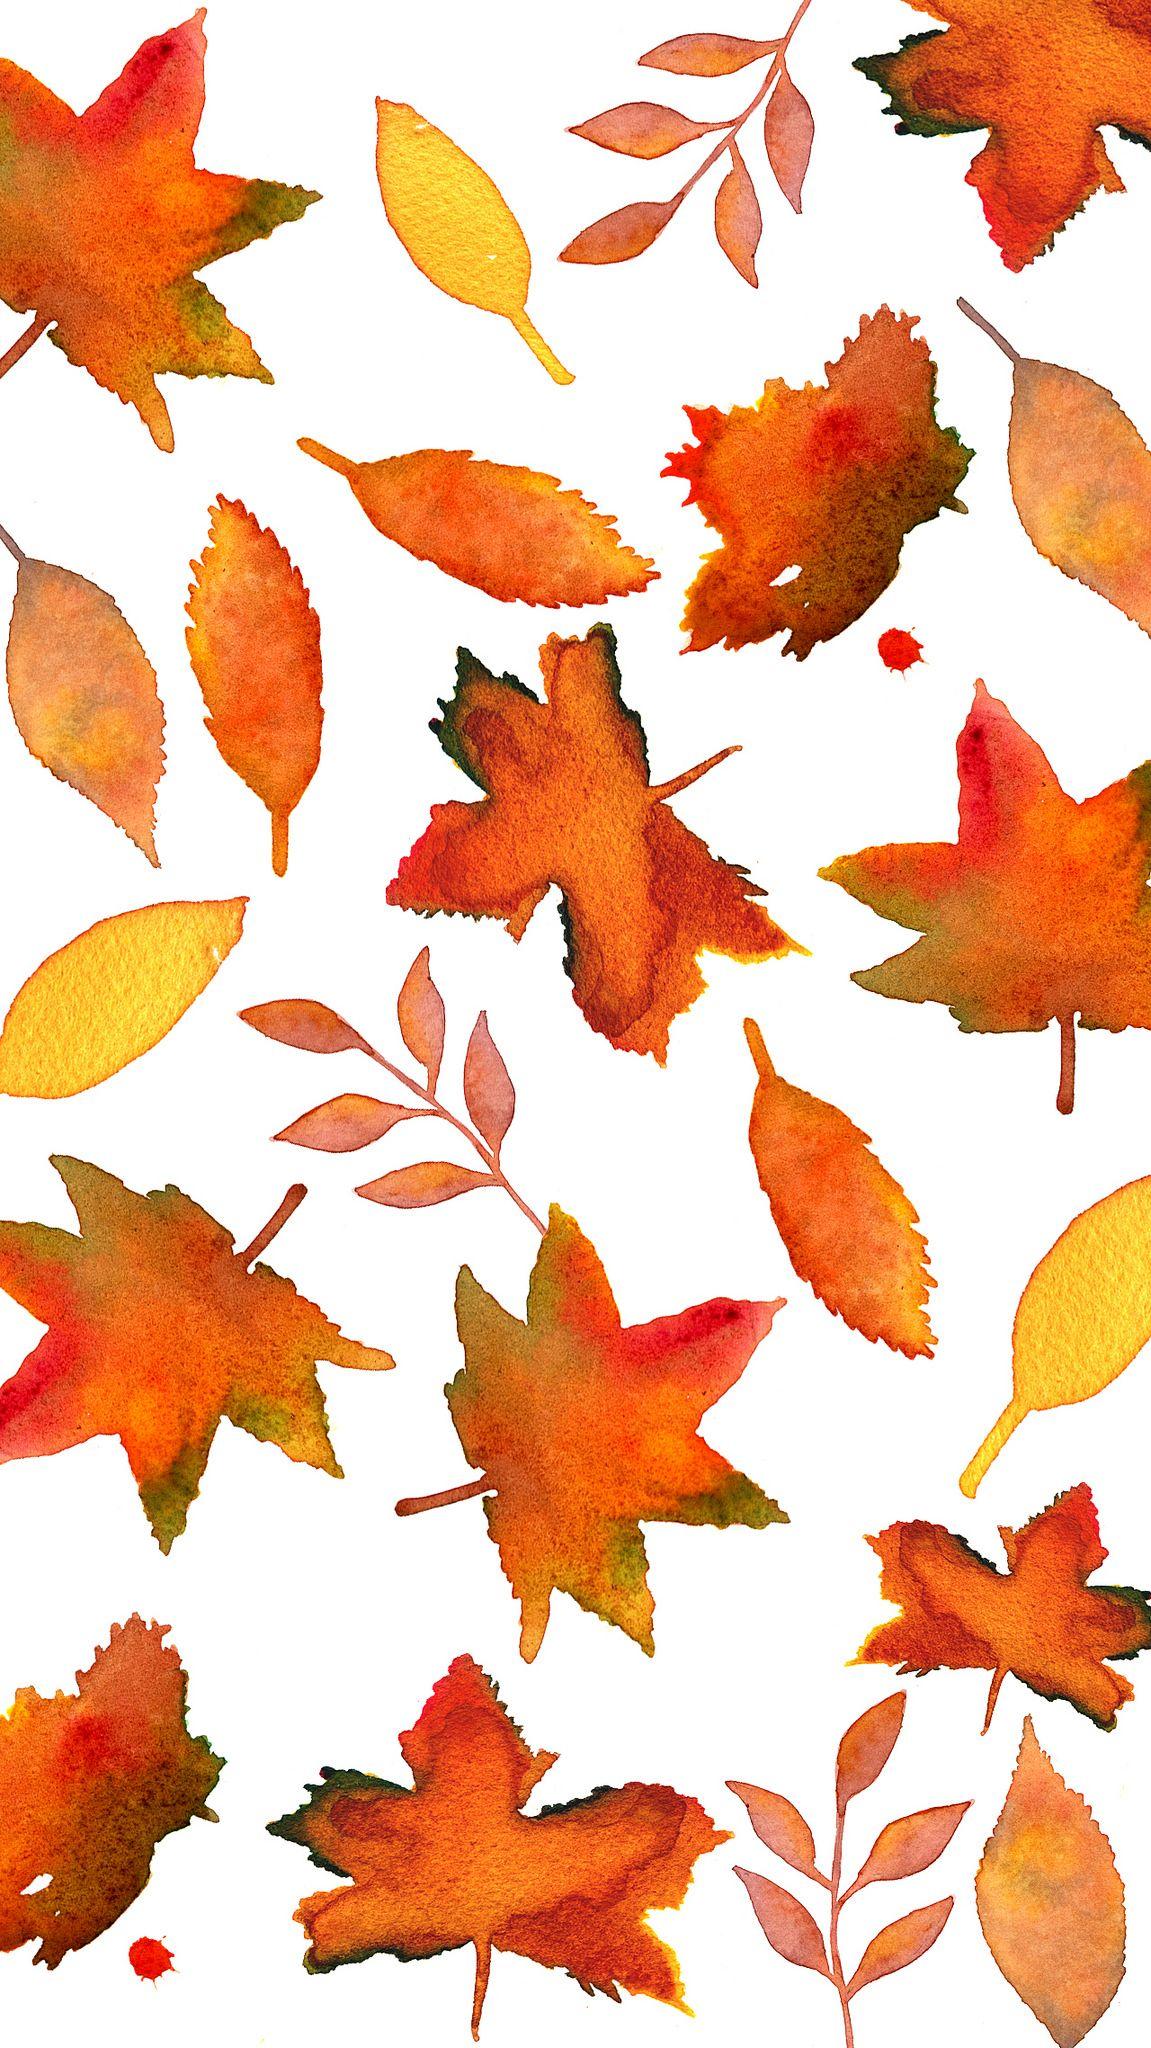 Fall Leaves. Fall wallpaper, Autumn leaves wallpaper, iPhone wallpaper fall